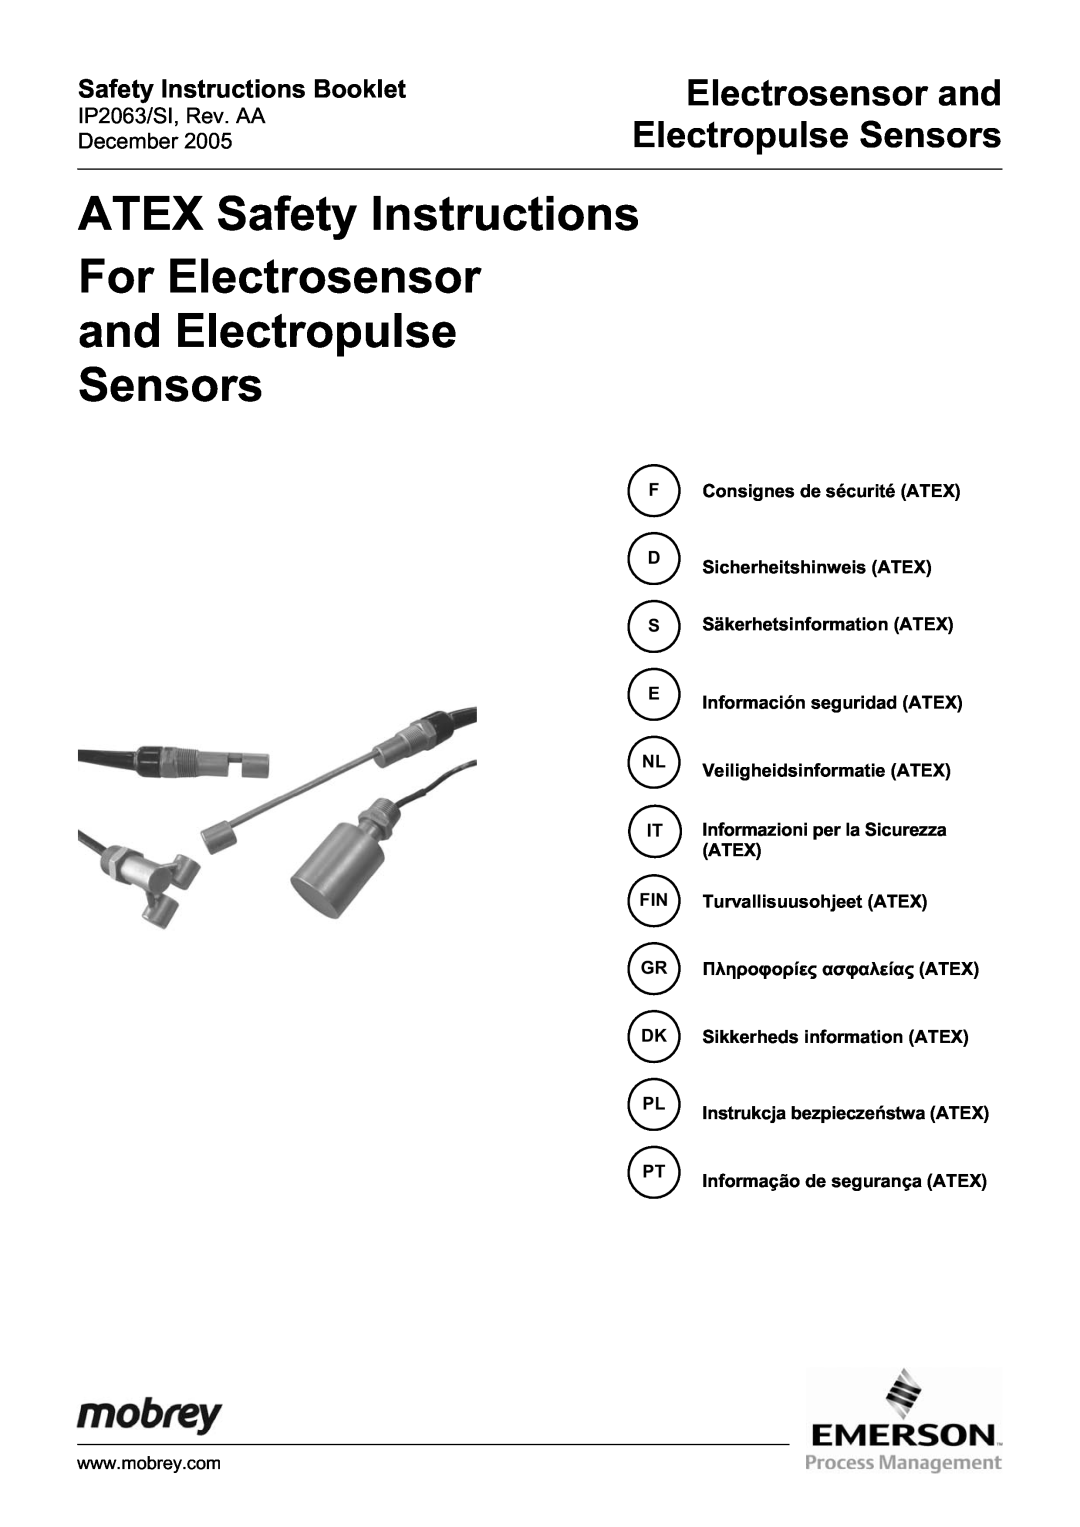 Emerson Electrosensor and Electropulse Sensors manual Safety Instructions Booklet, IP2063/SI, Rev. AA December 